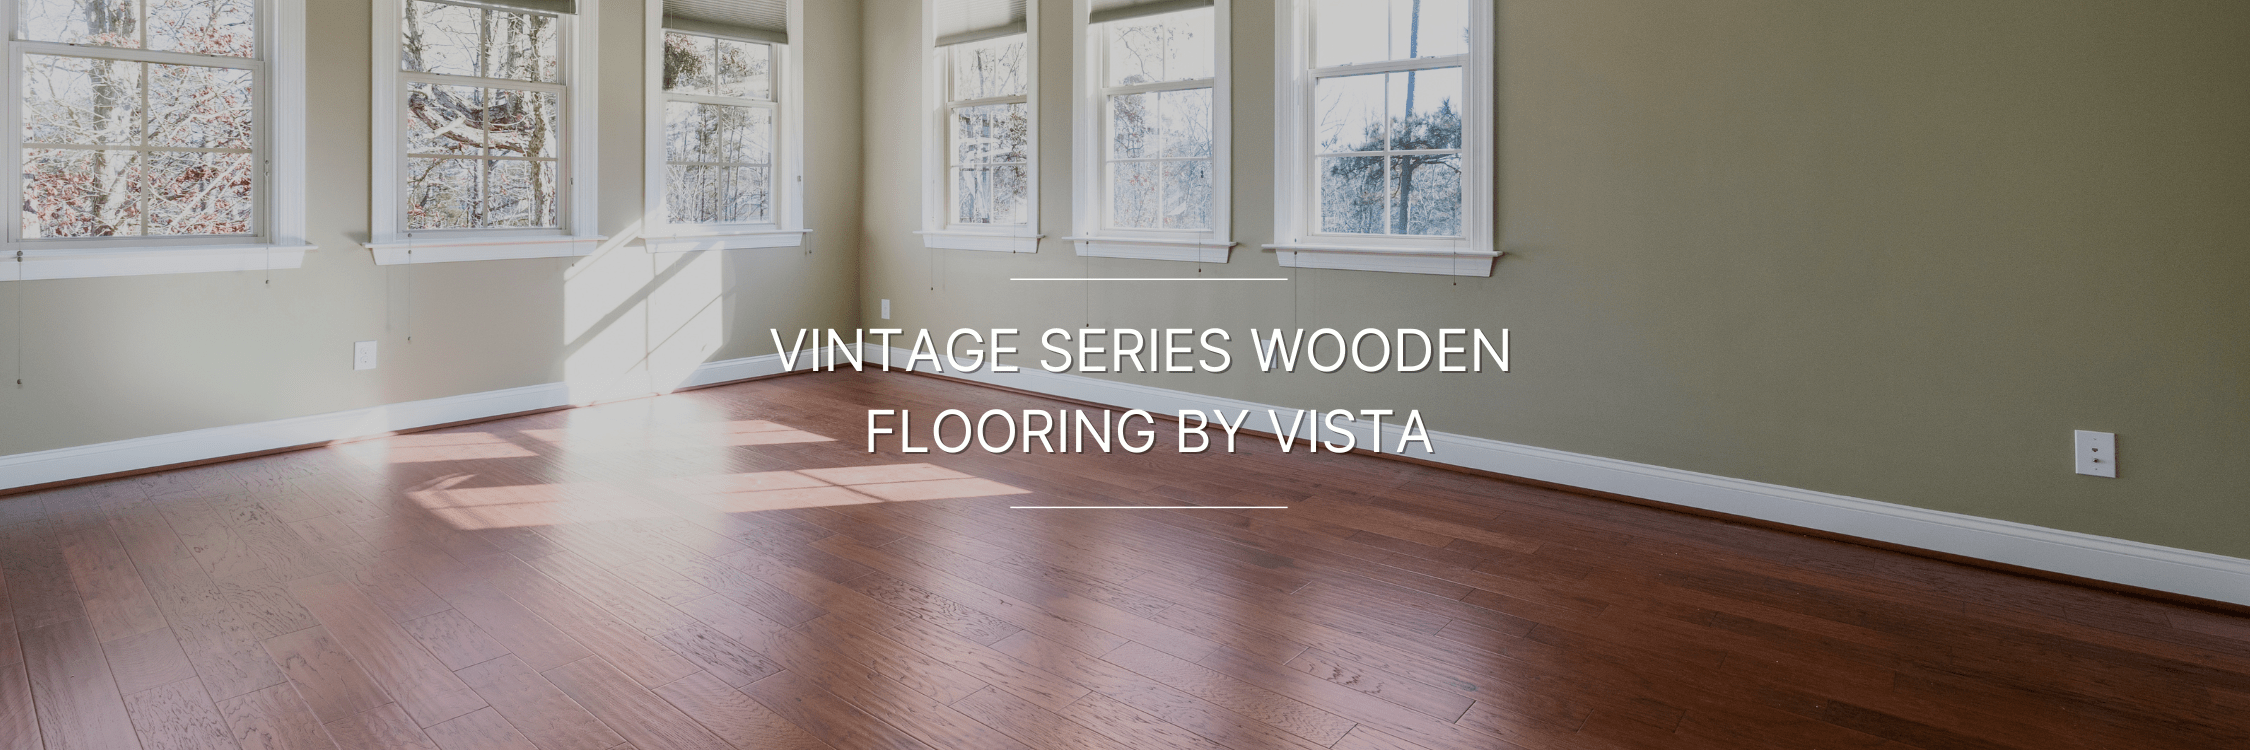 Vintage Series Wooden Flooring by Vista